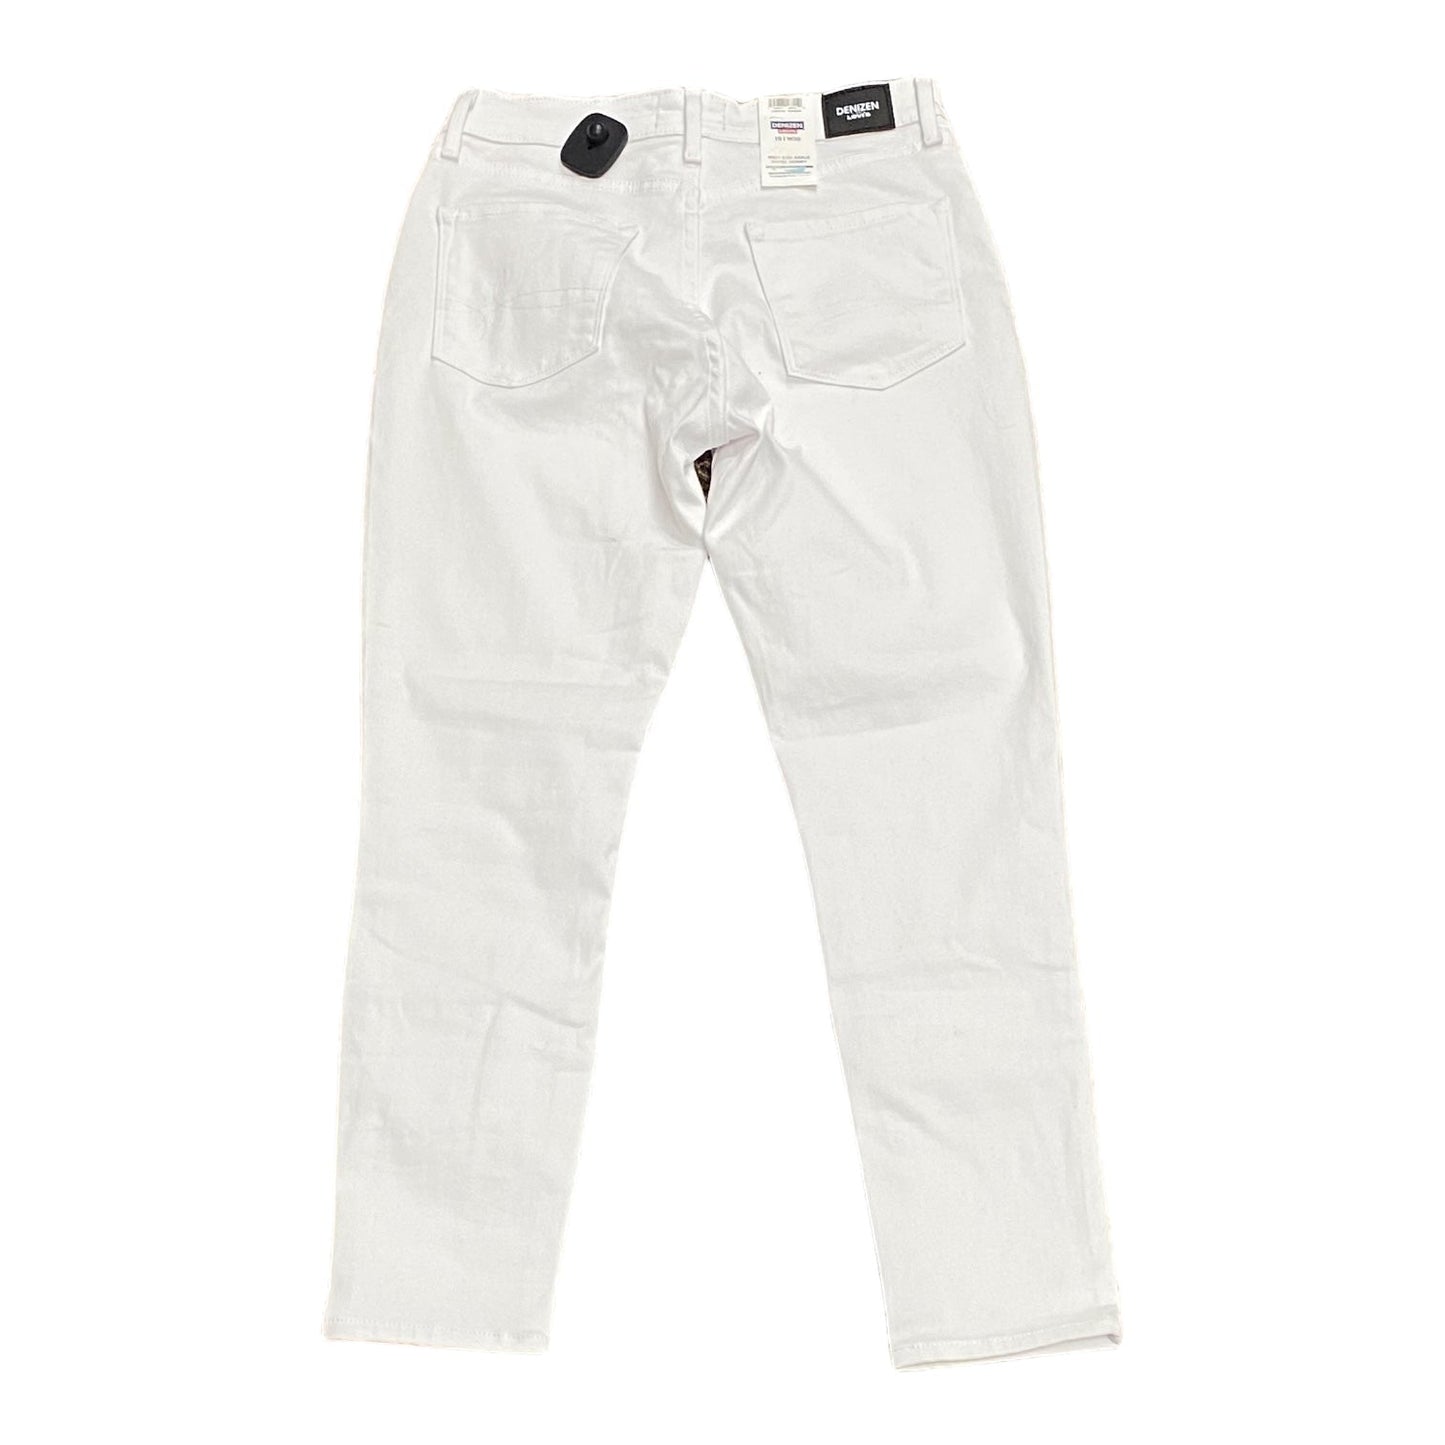 White Denim Jeans Skinny Denizen By Levis, Size 10